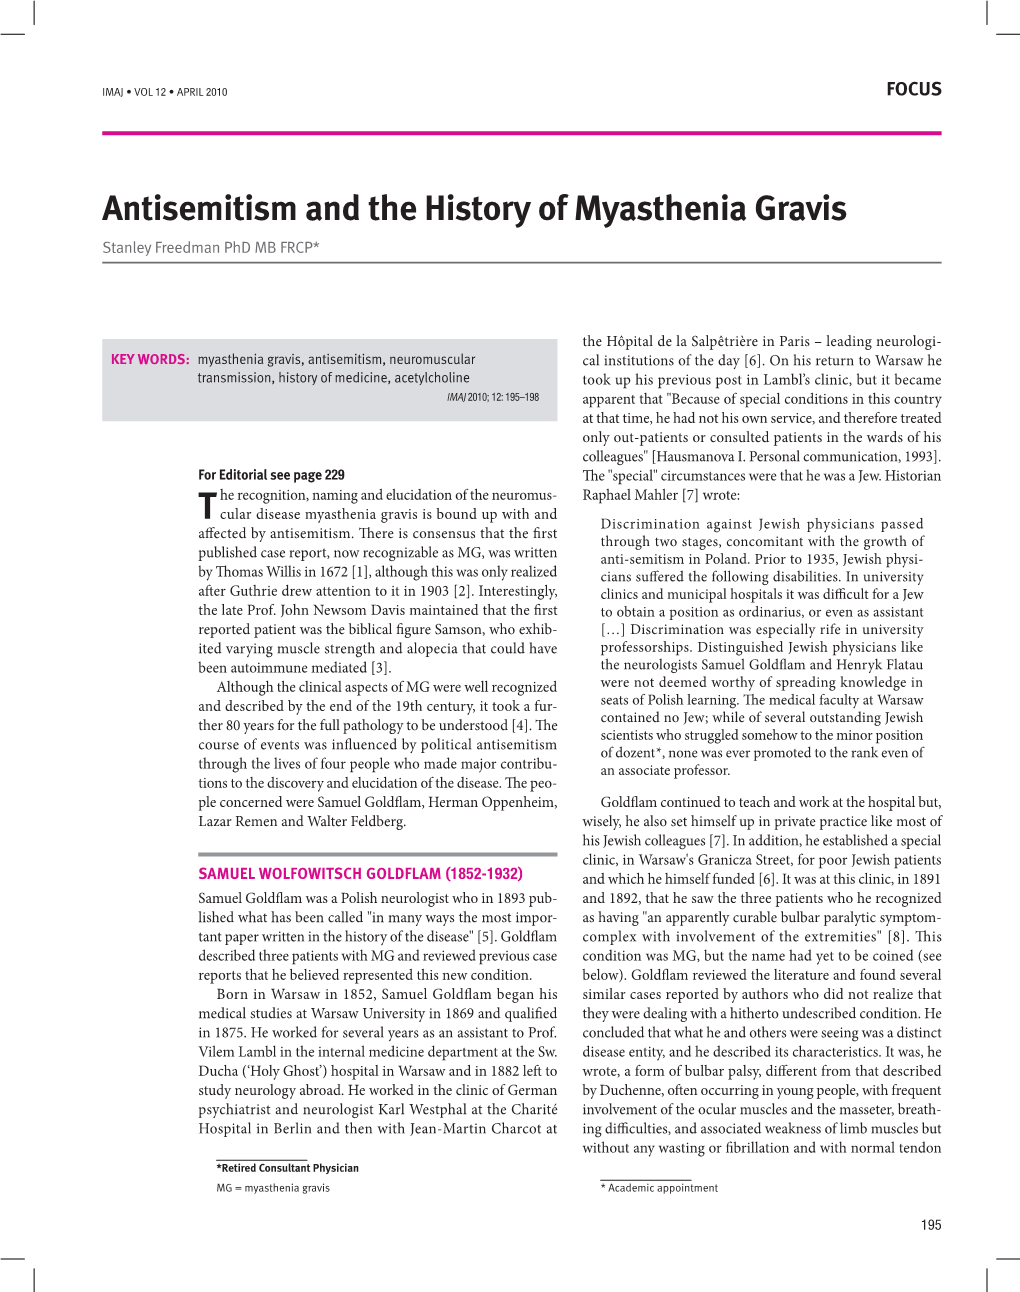 Antisemitism and the History of Myasthenia Gravis Stanley Freedman Phd MB FRCP*